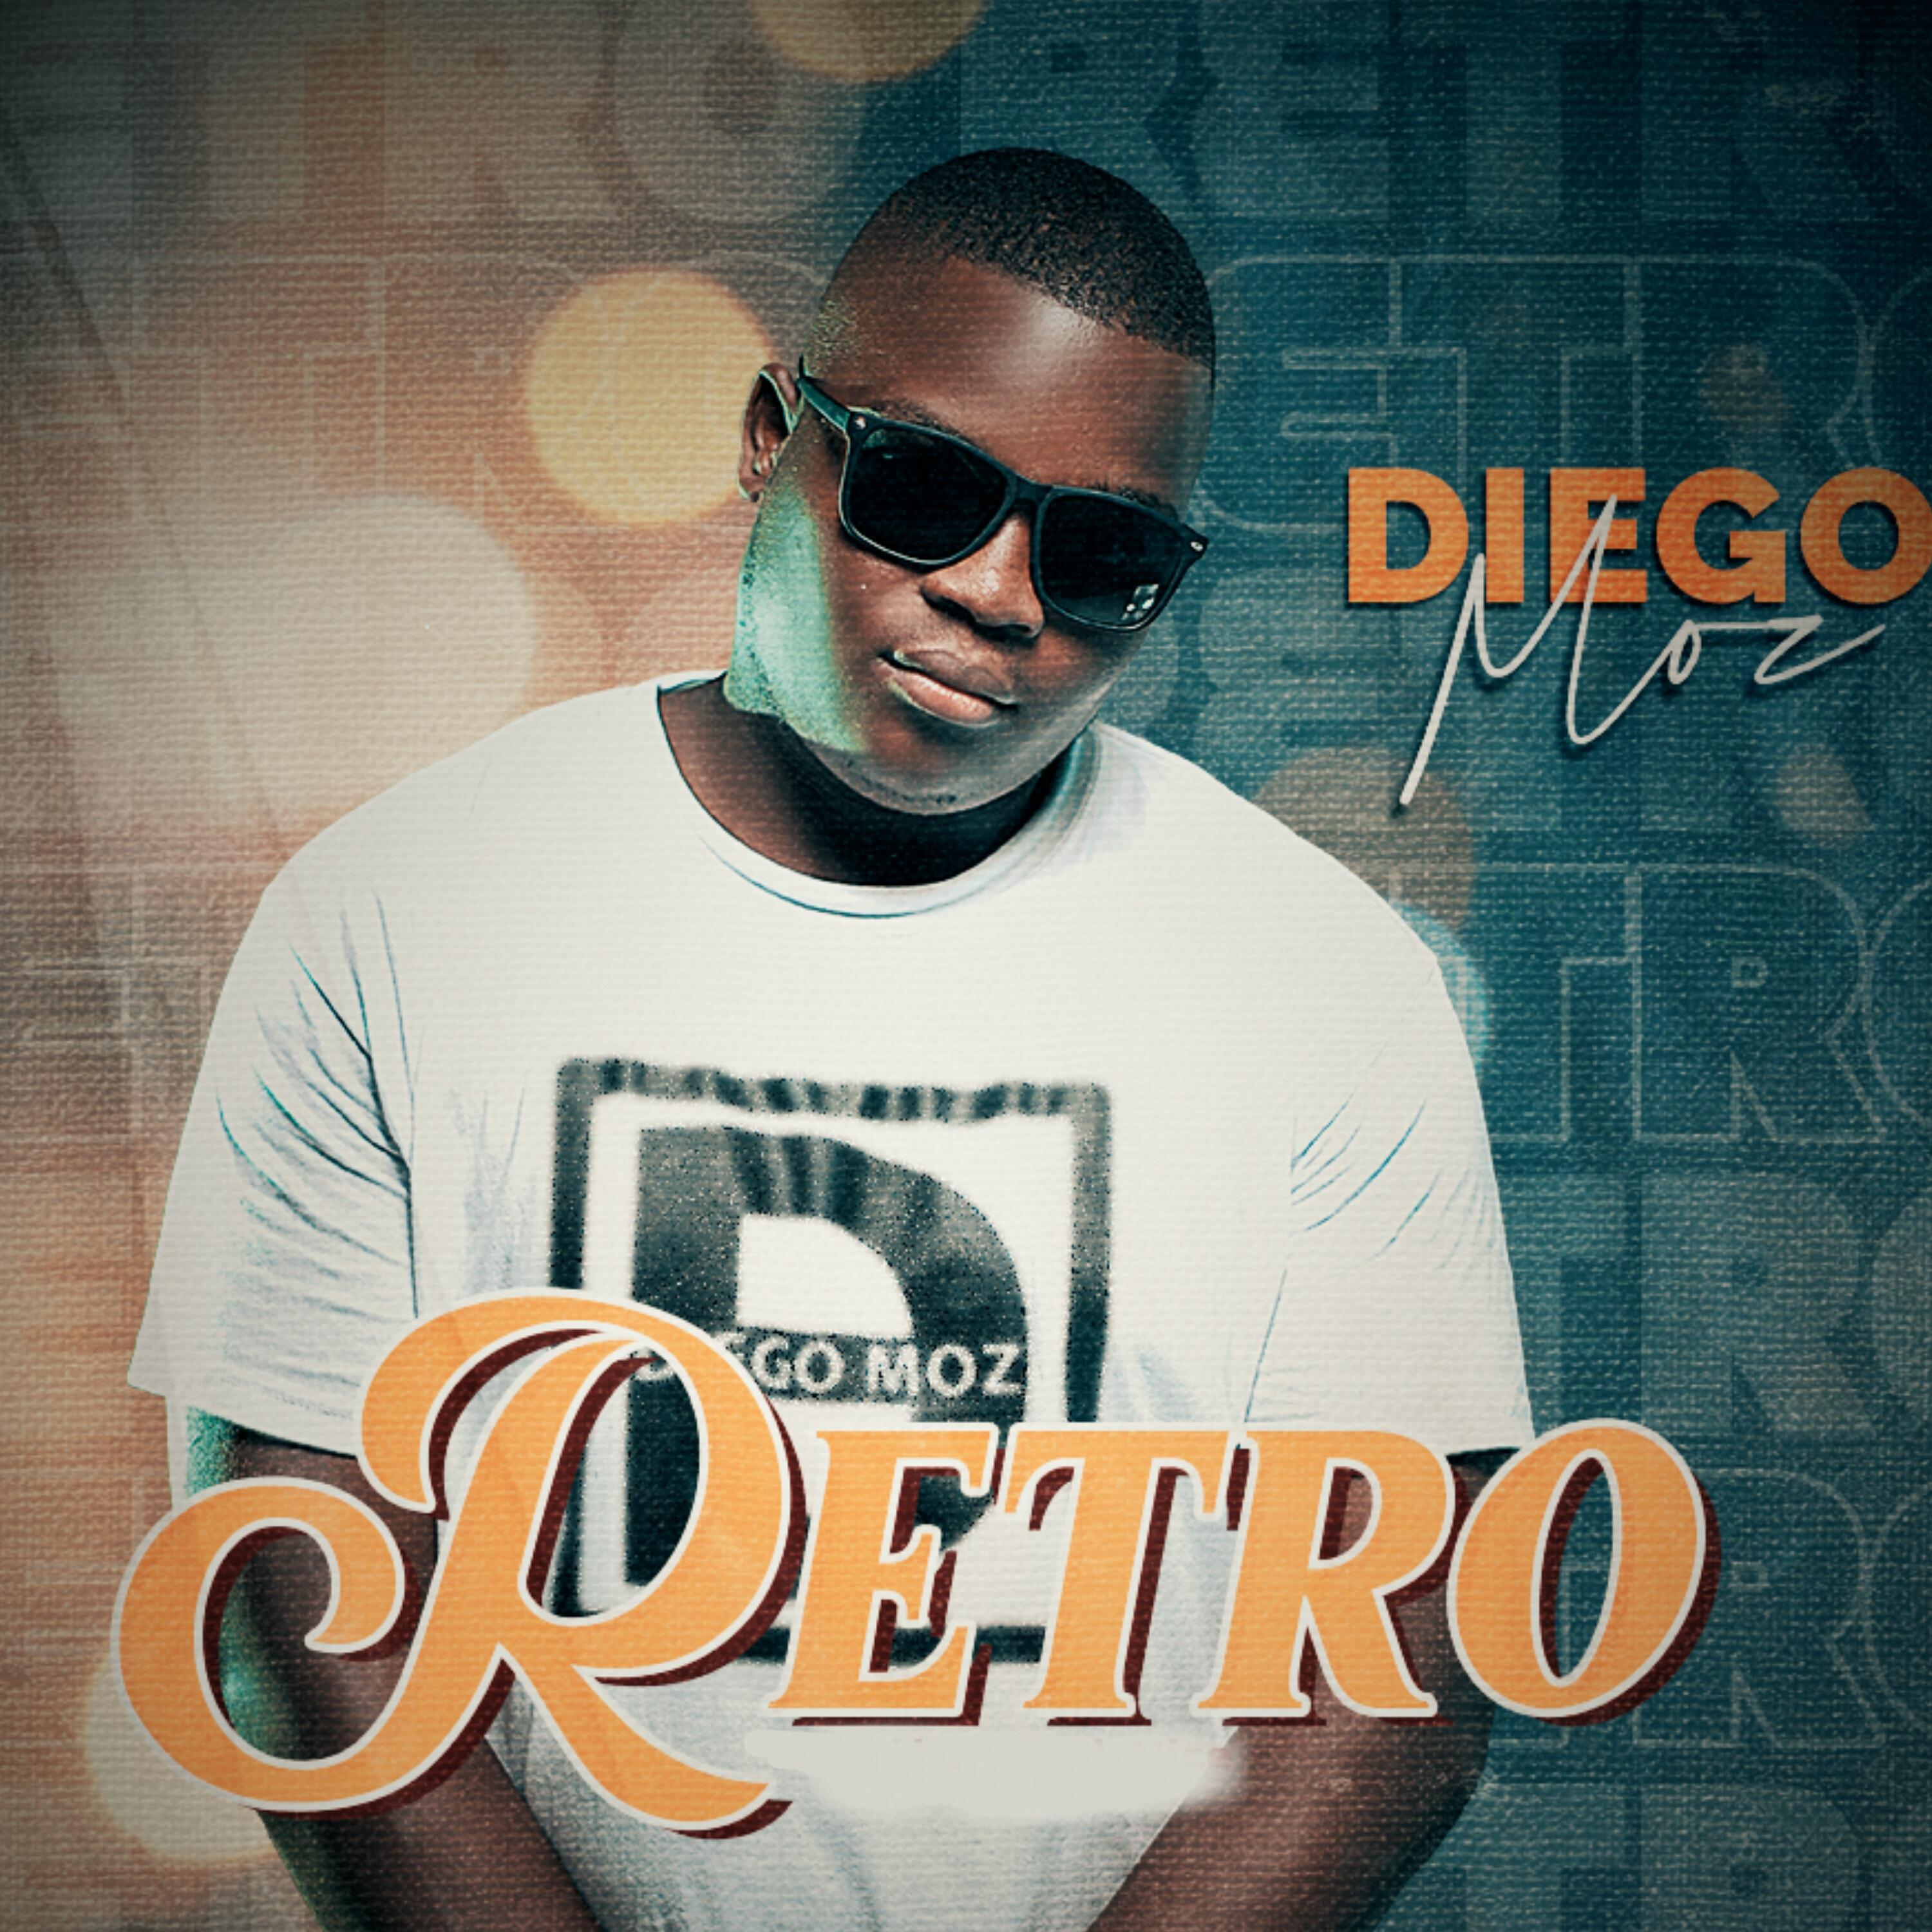 Diego Moz - Retro